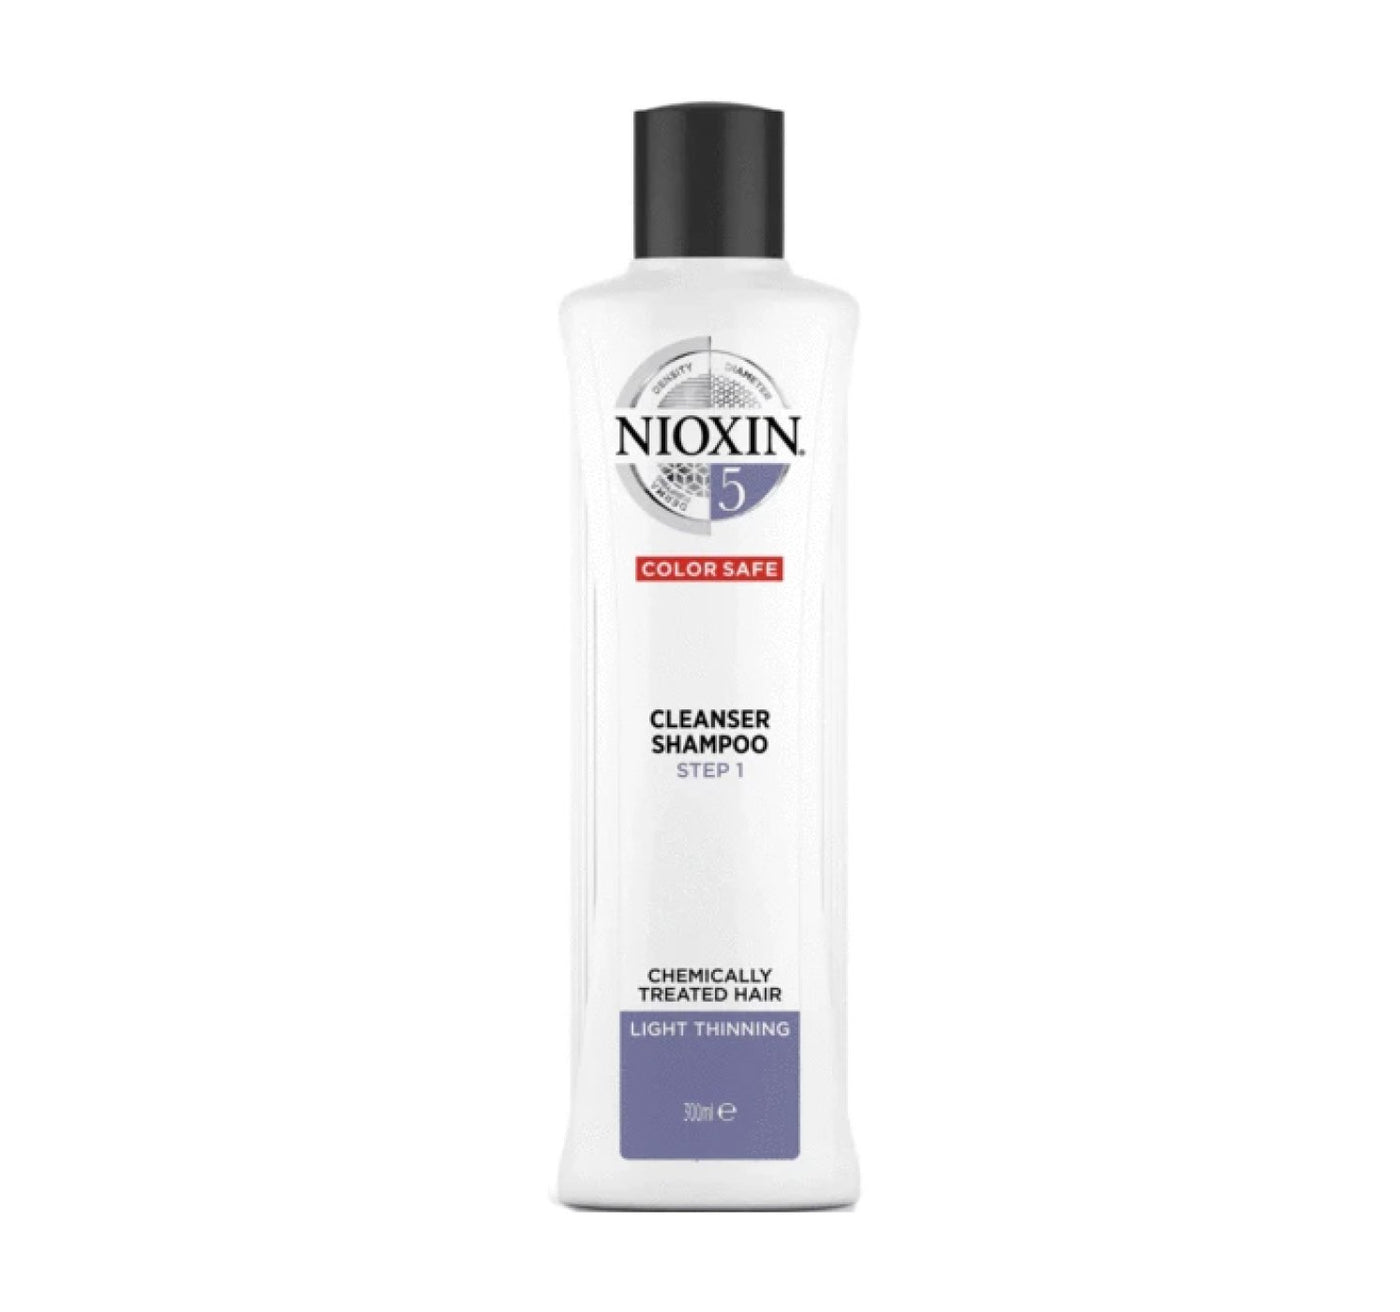 Nioxin System 5 Cleanser Shampoo 300ml - Salon Warehouse